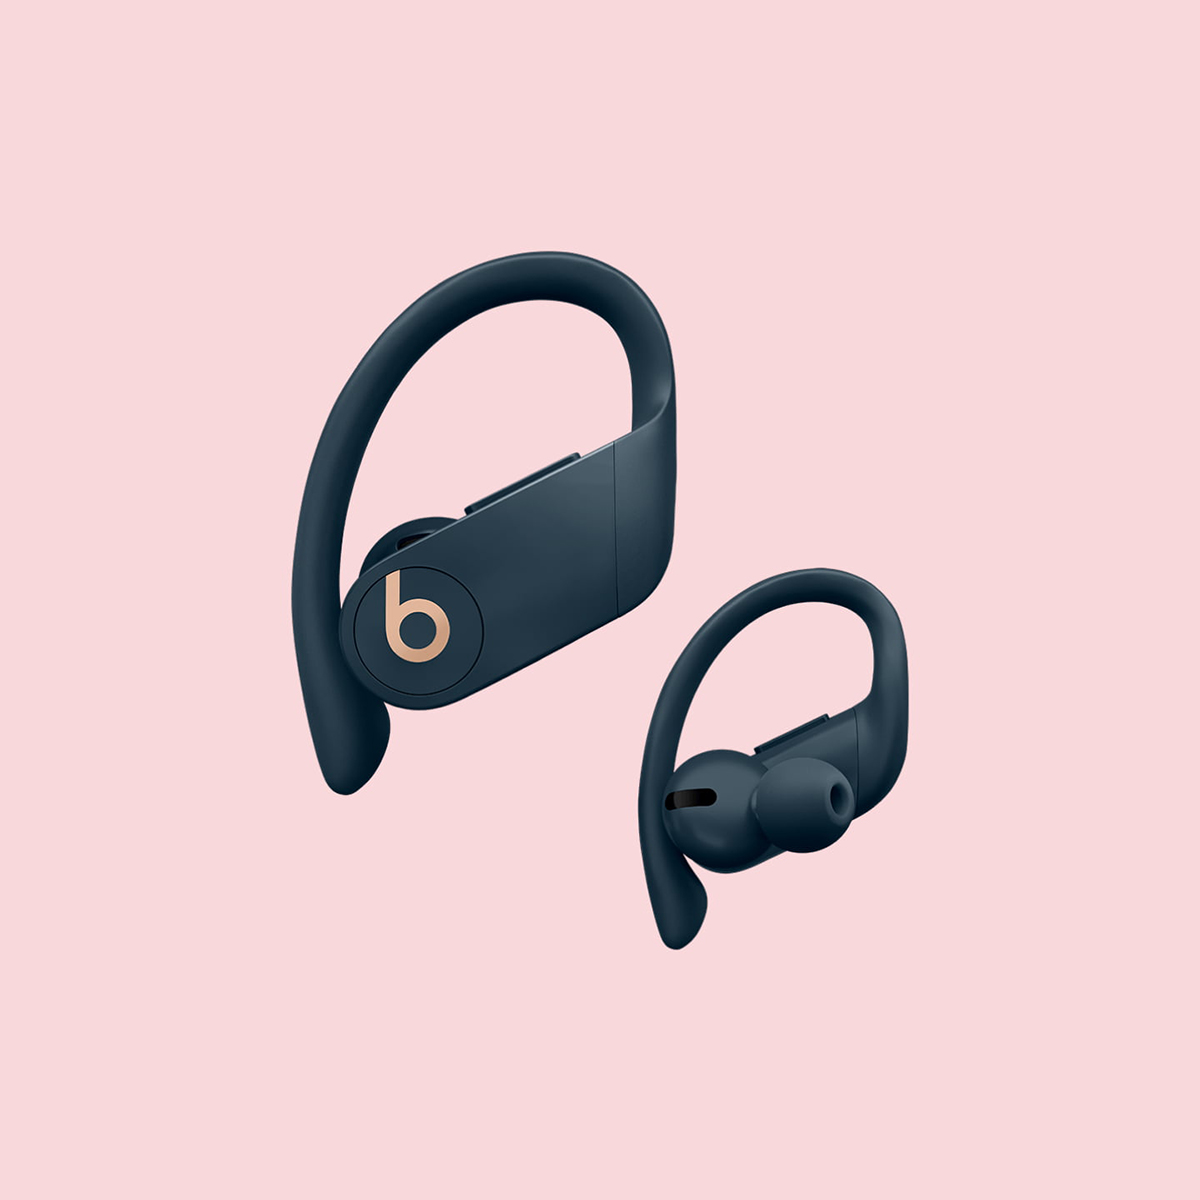 Wireless Headphones and Earbuds - Beats